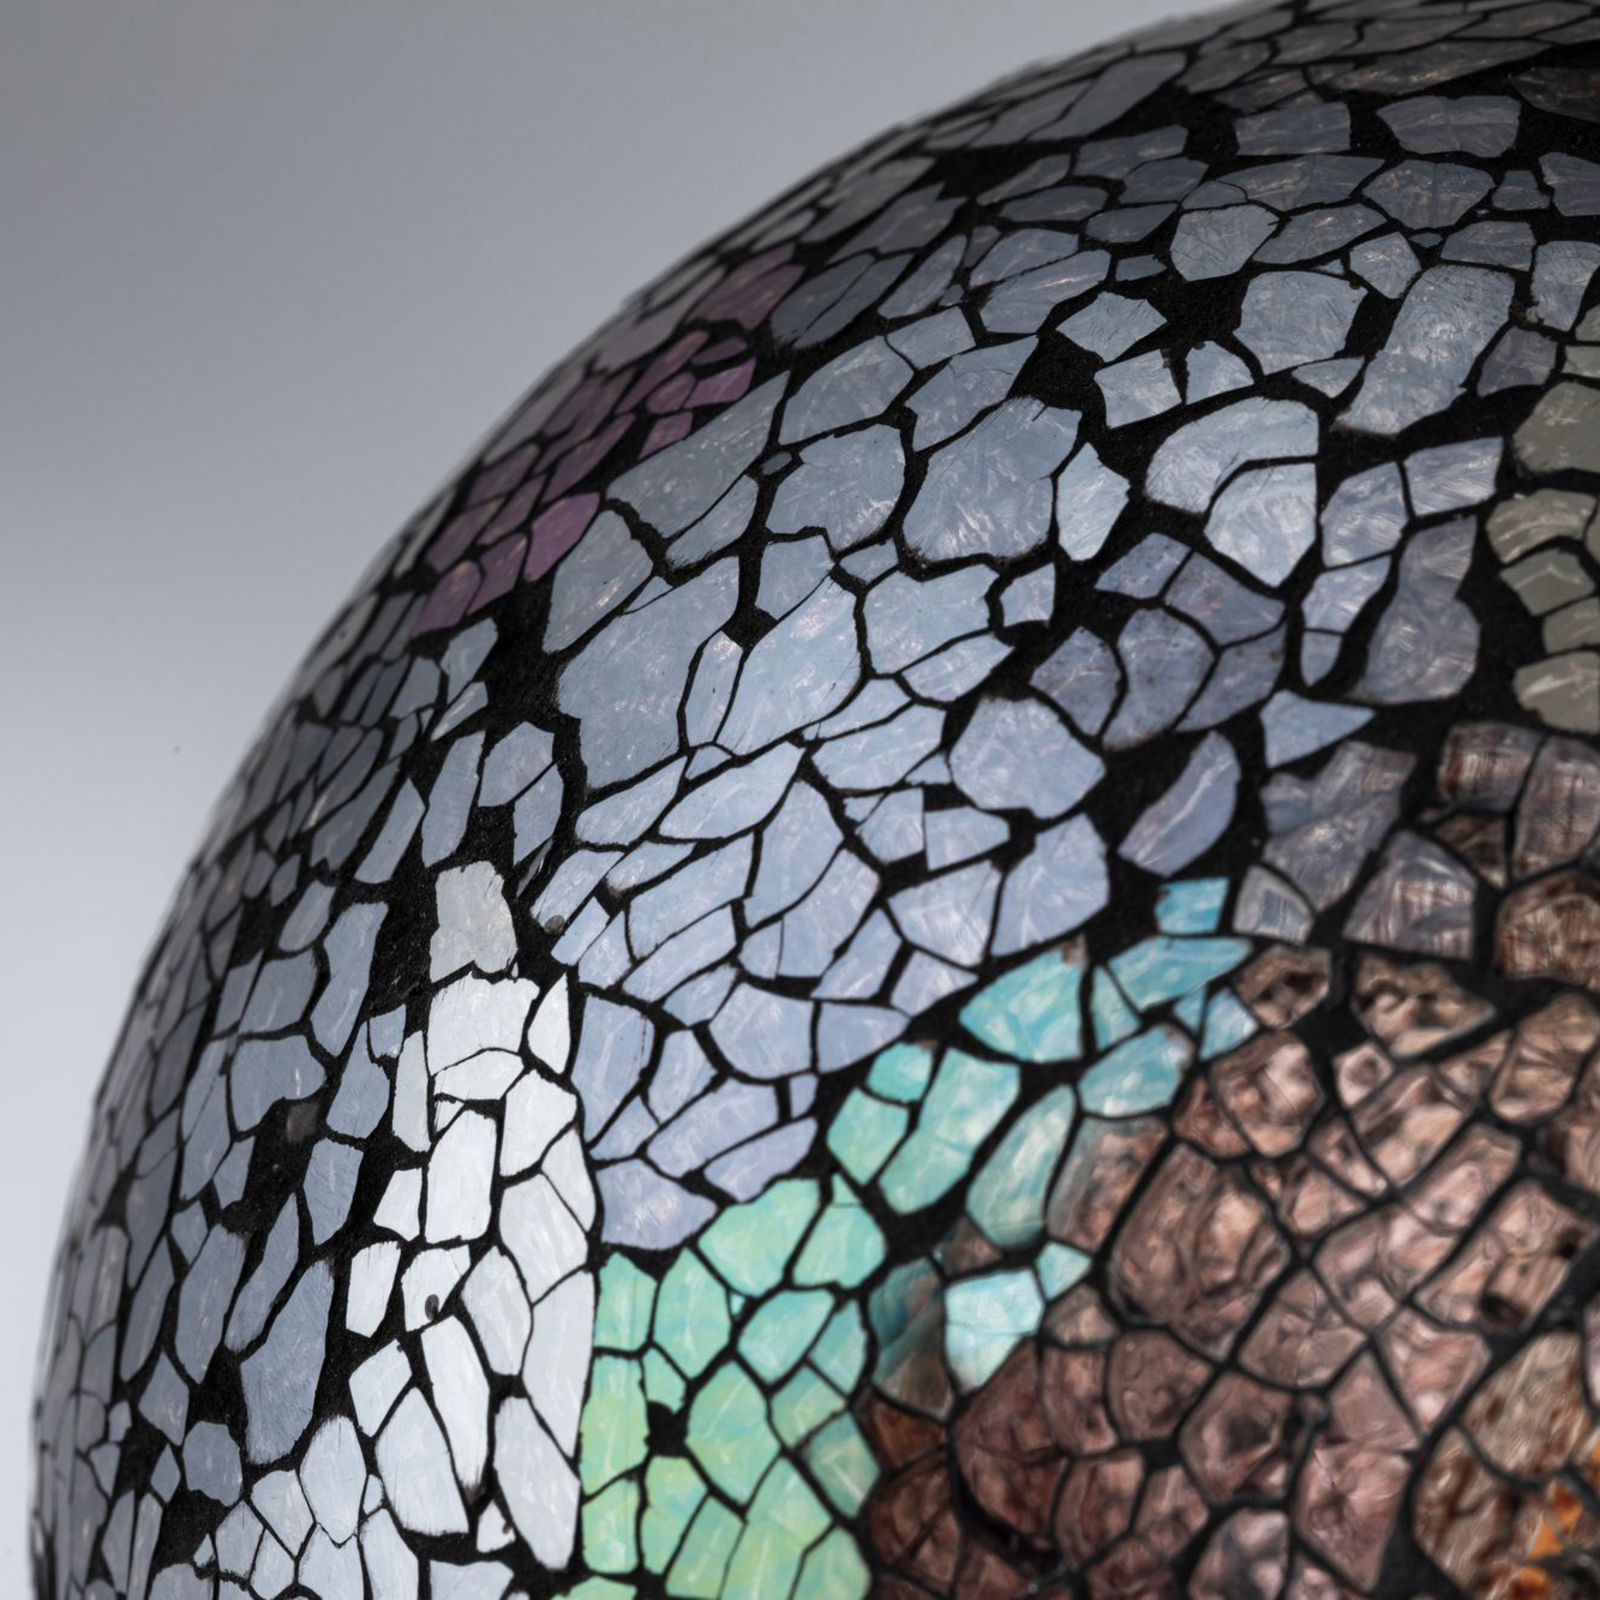 Paulmann E27 LED-Globe 5W Miracle Mosaic schwarz